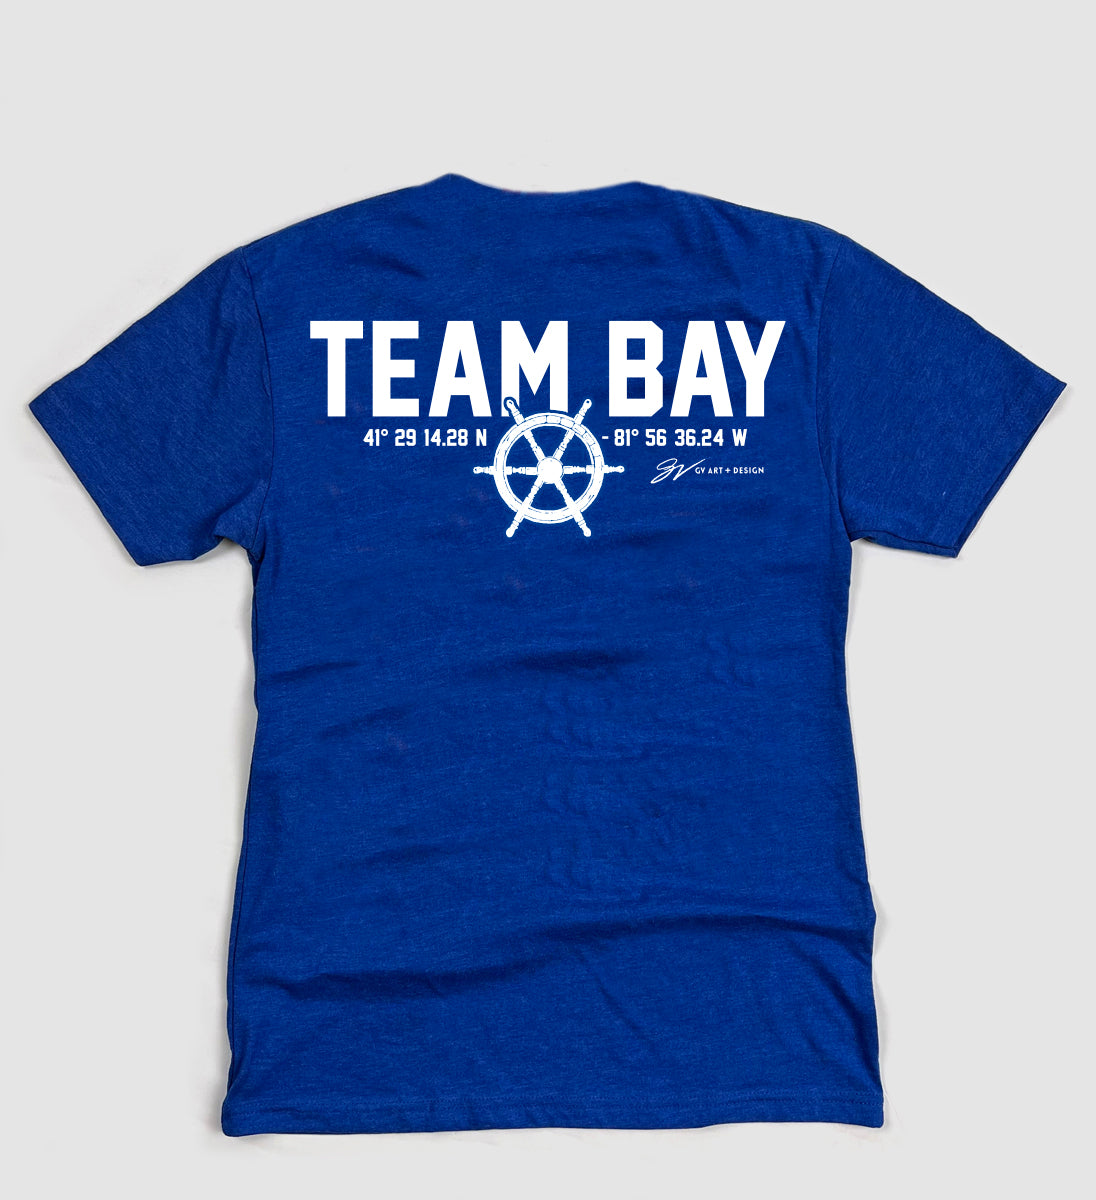 Bay War On The Shore T shirt